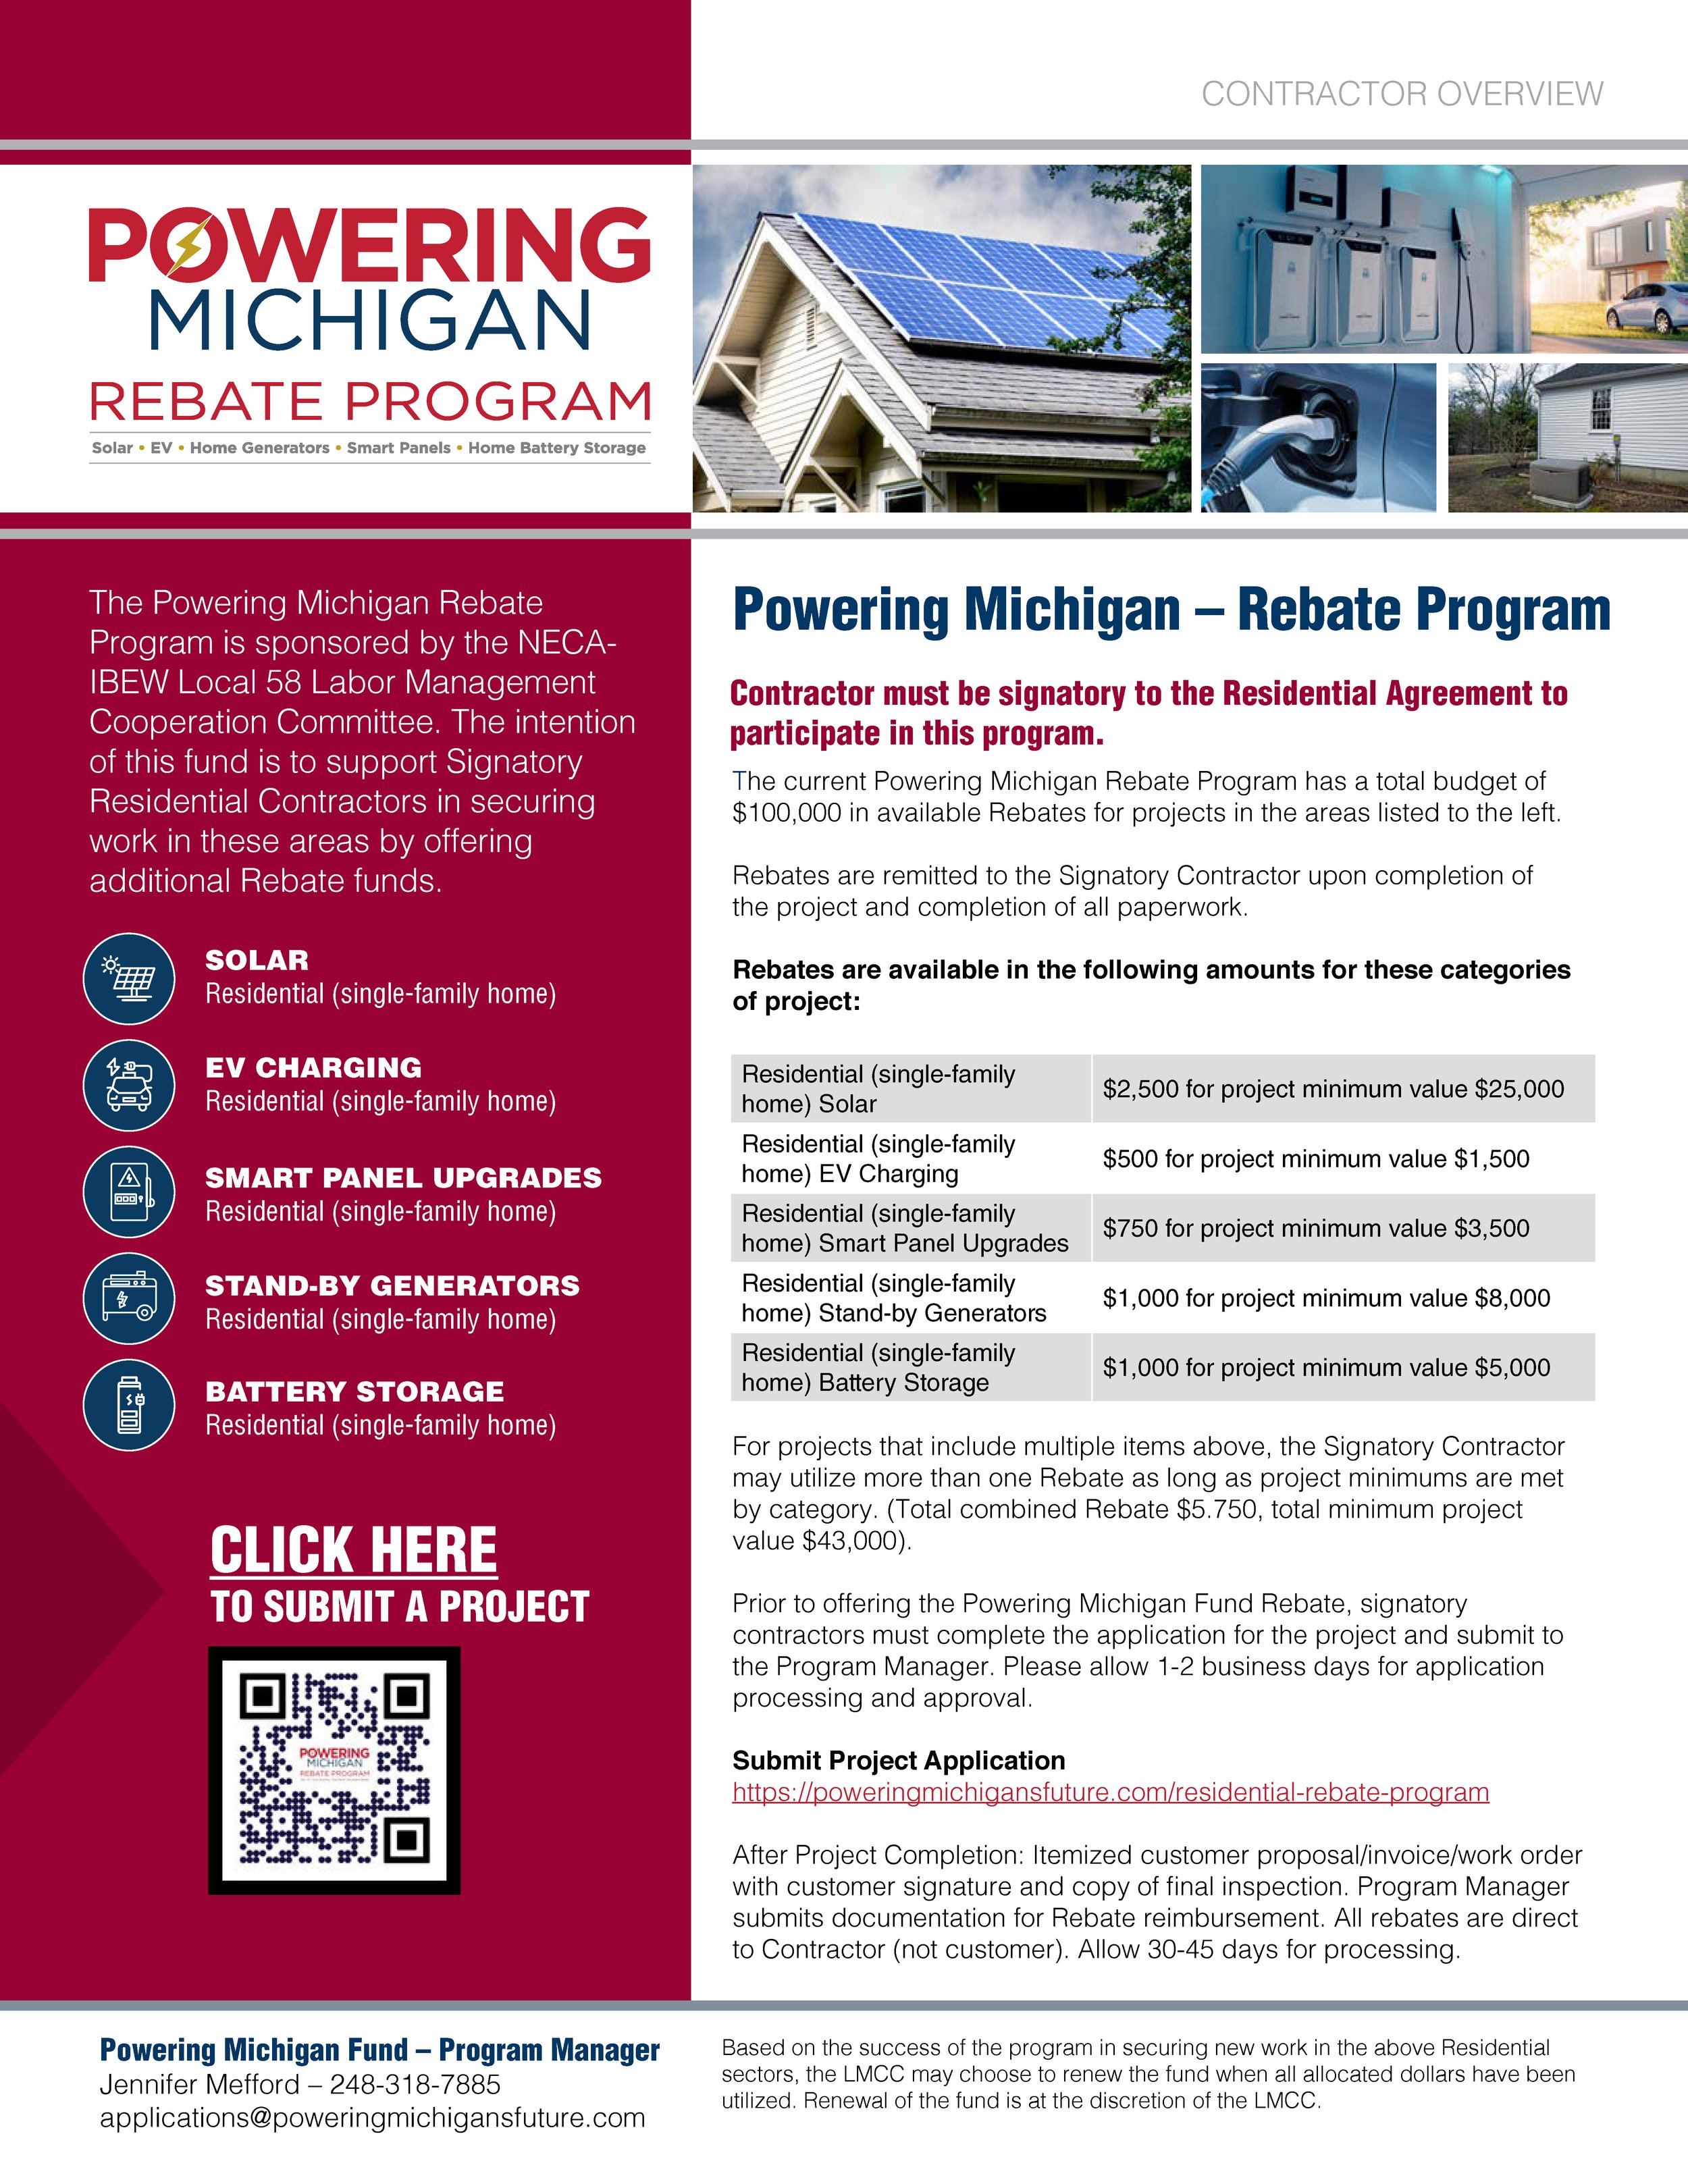 Michigan Energy Rebate Companies Contractors